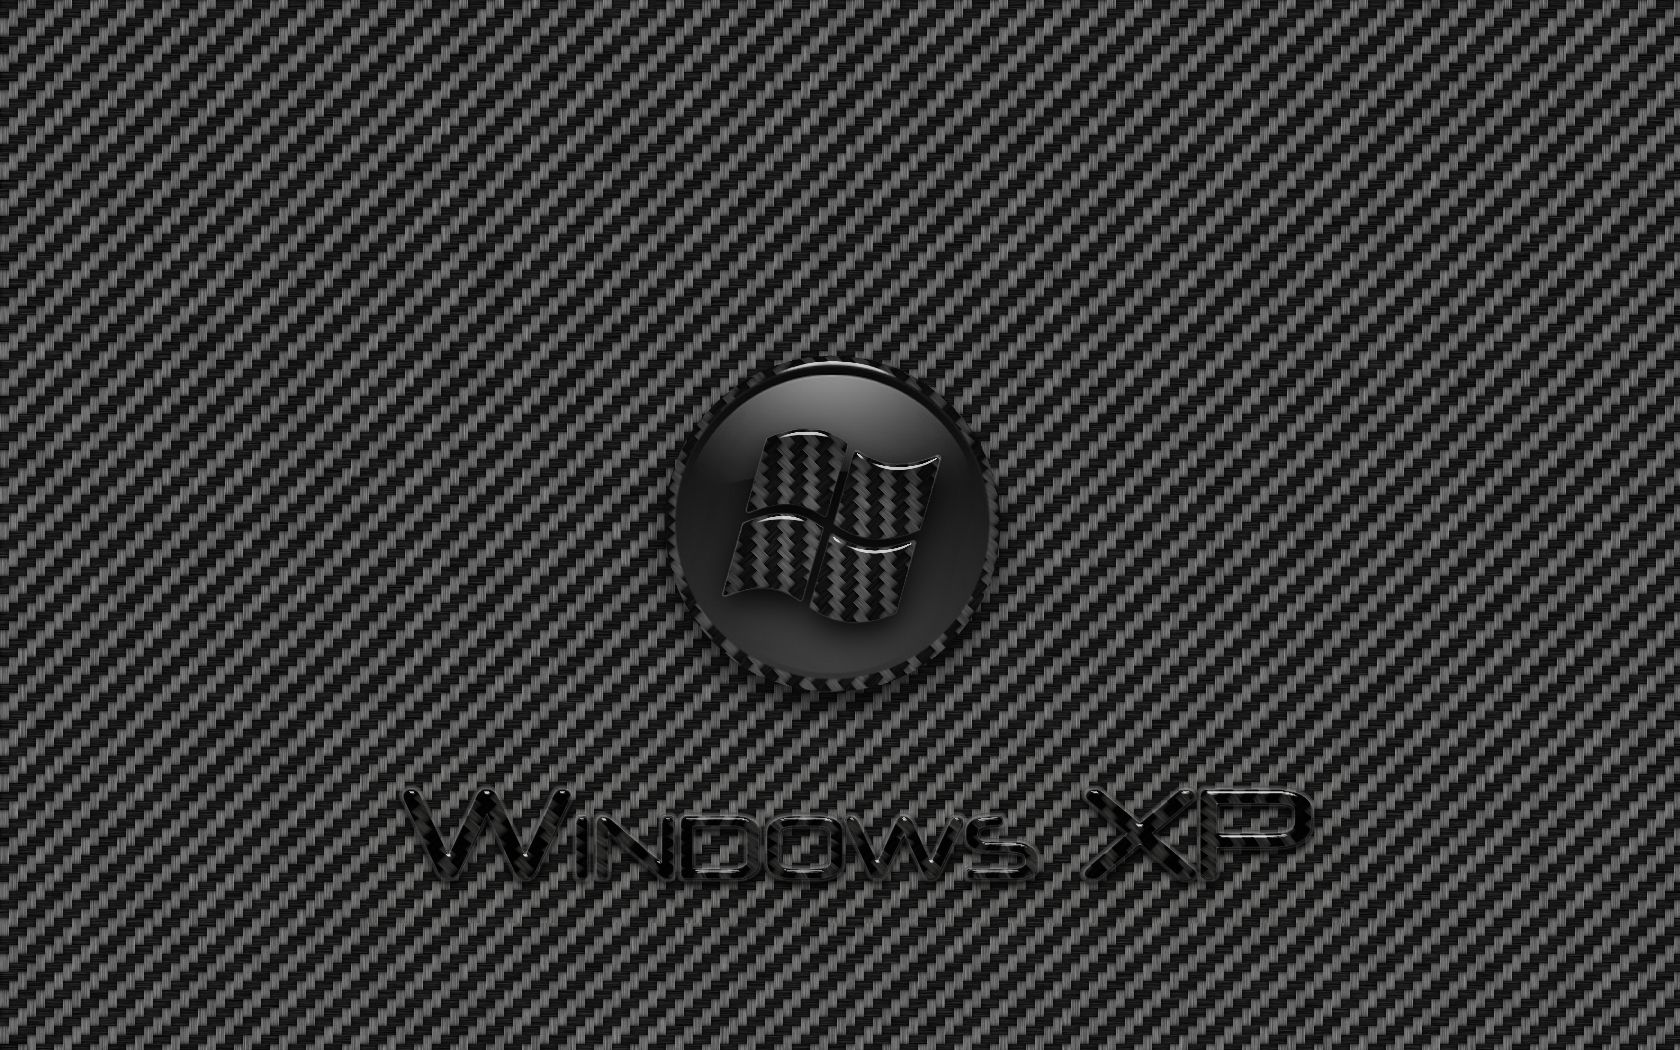 Carbon Fiber Windows XP by AndoOKC on DeviantArt